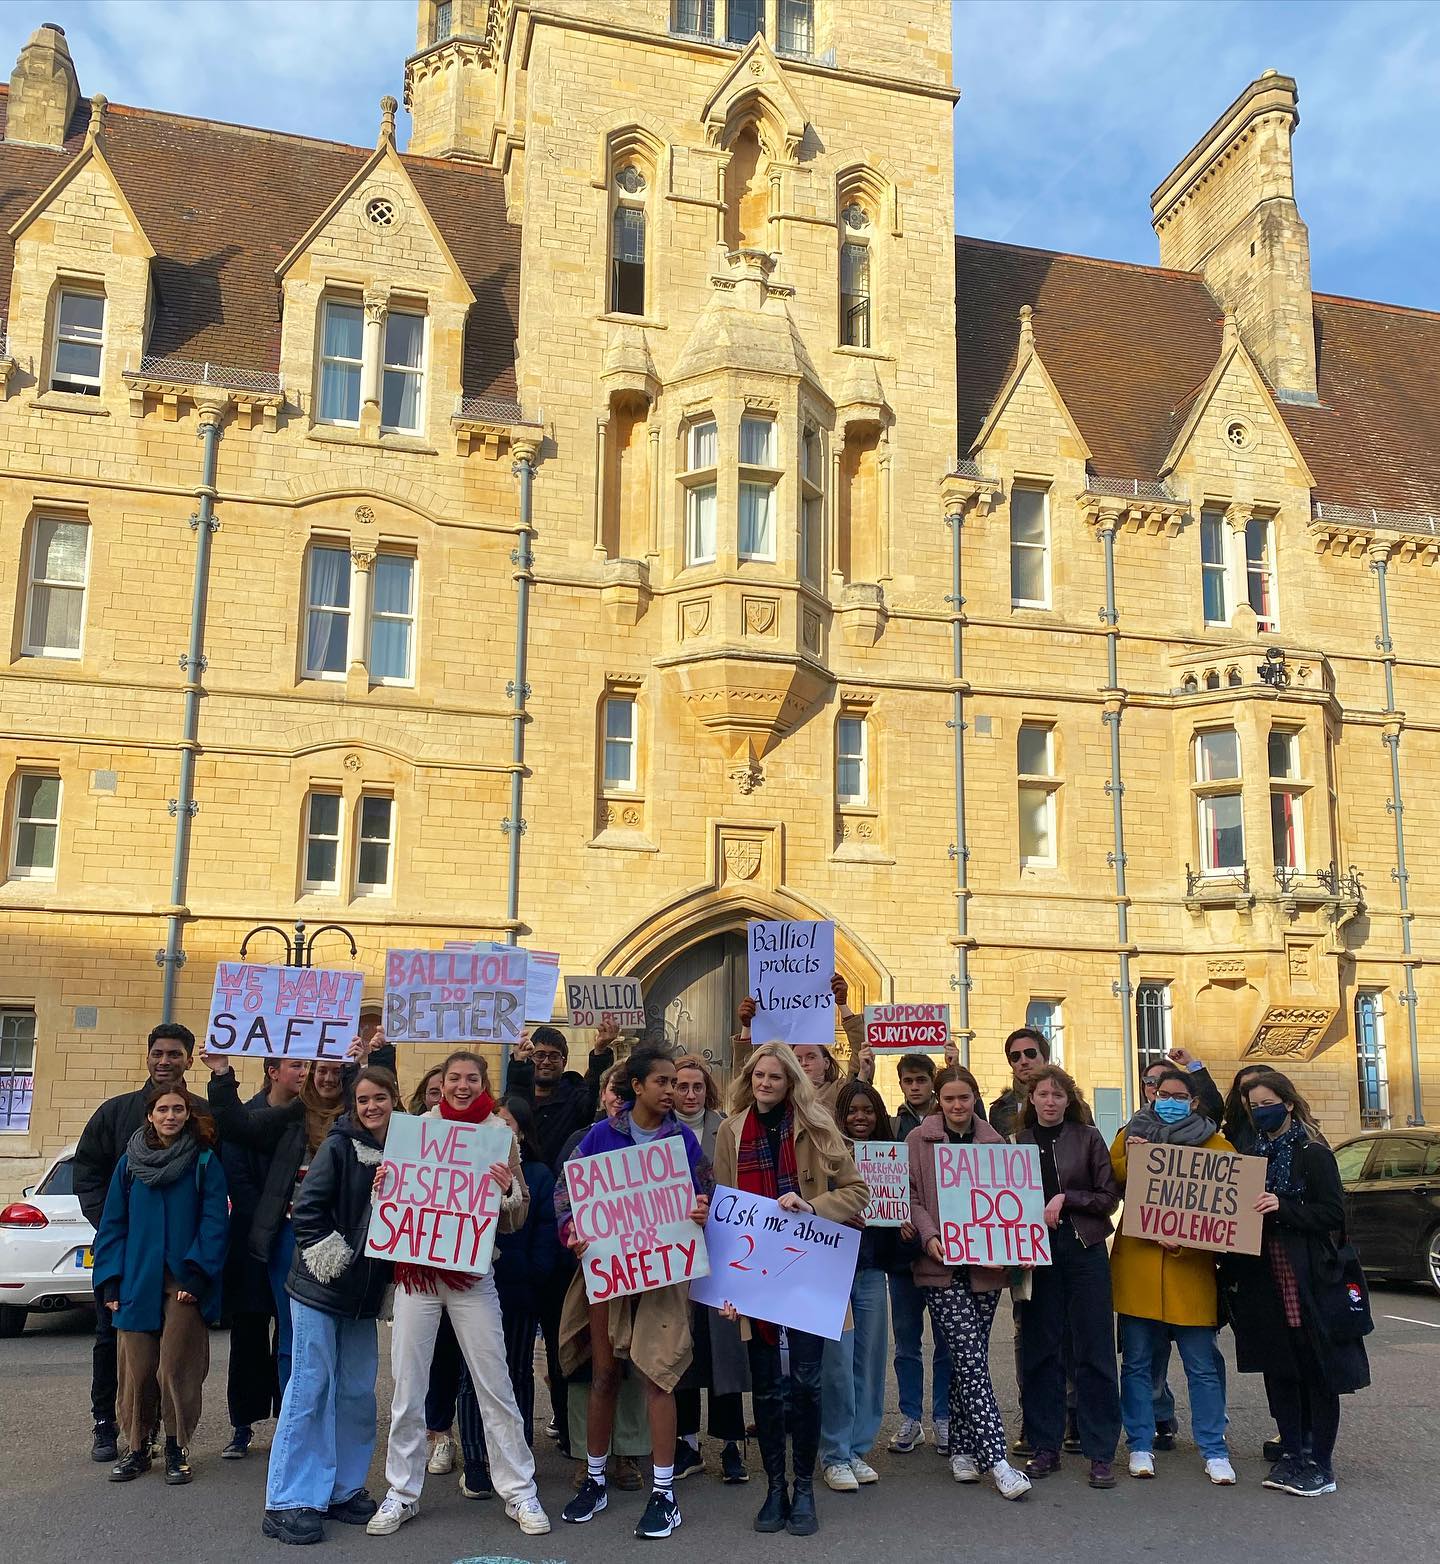 Protest outside Balliol College, Oxford.